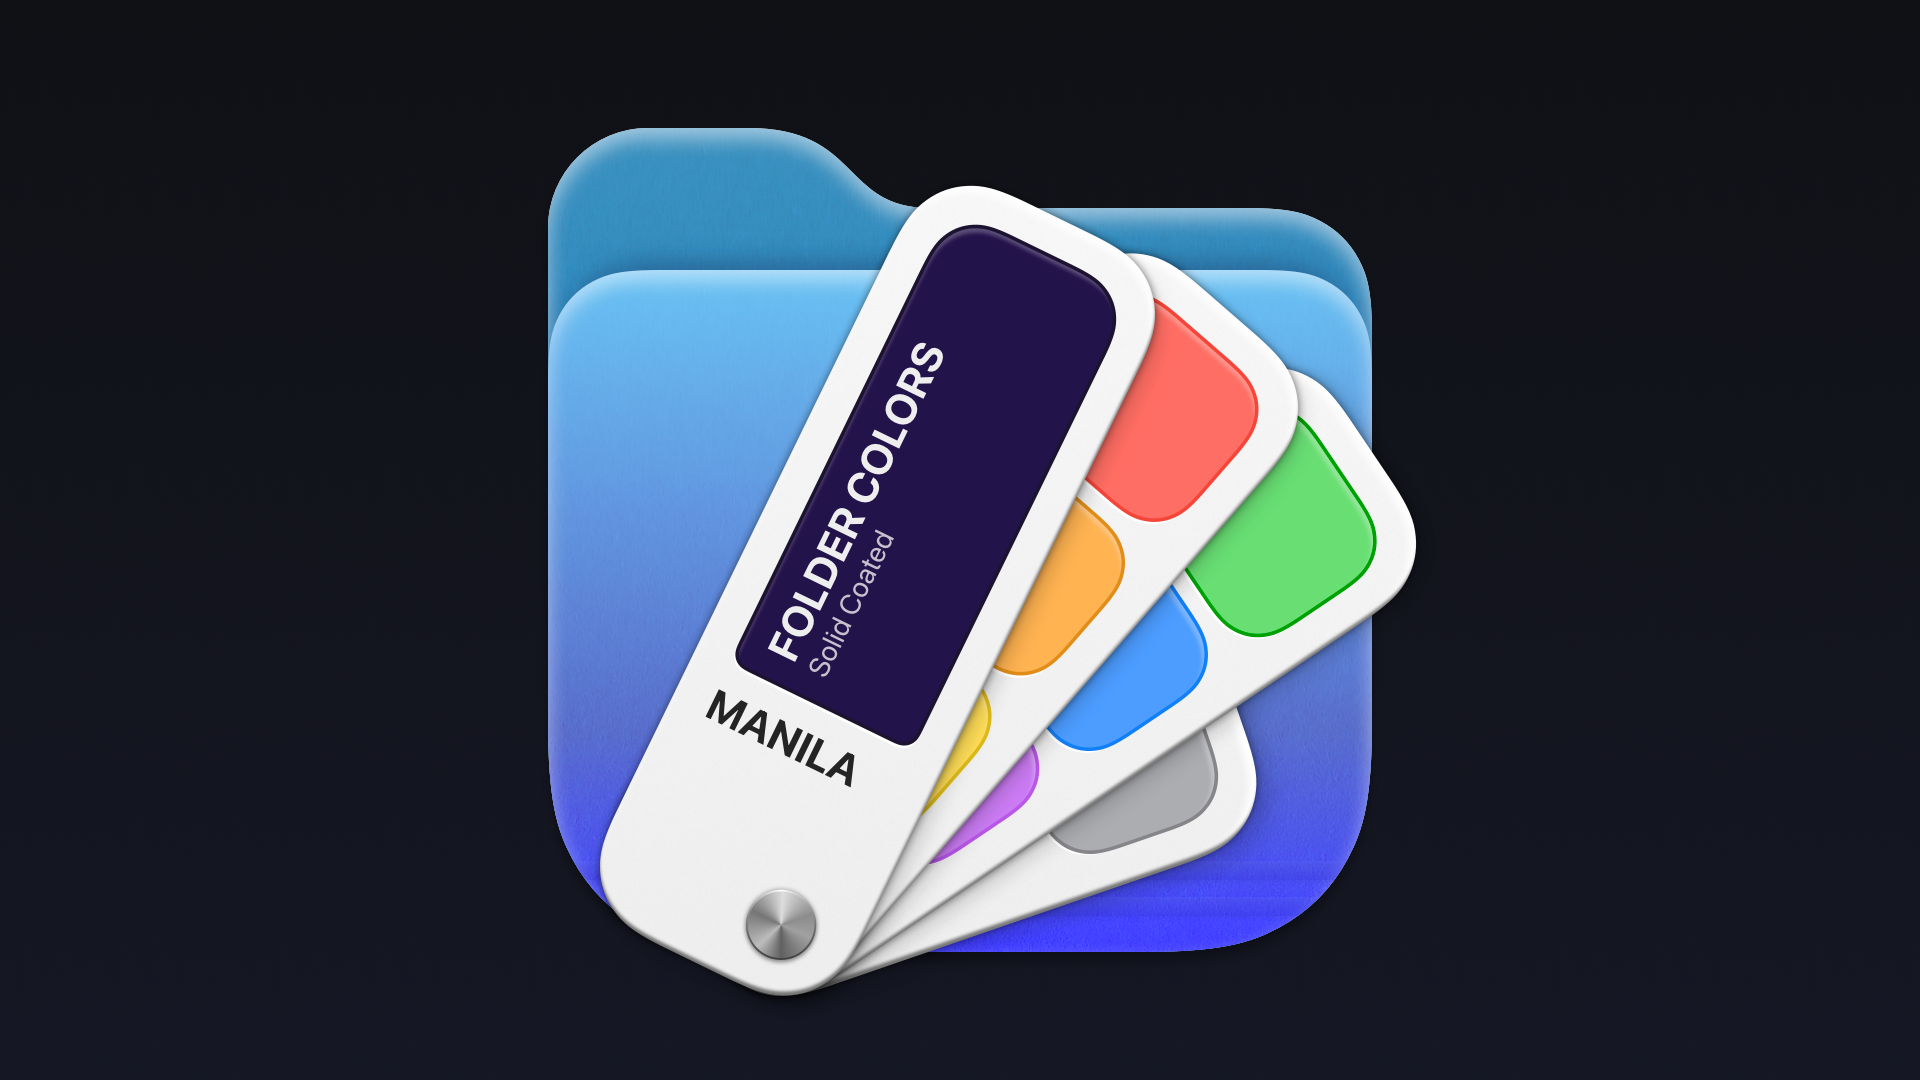 Manila app icon